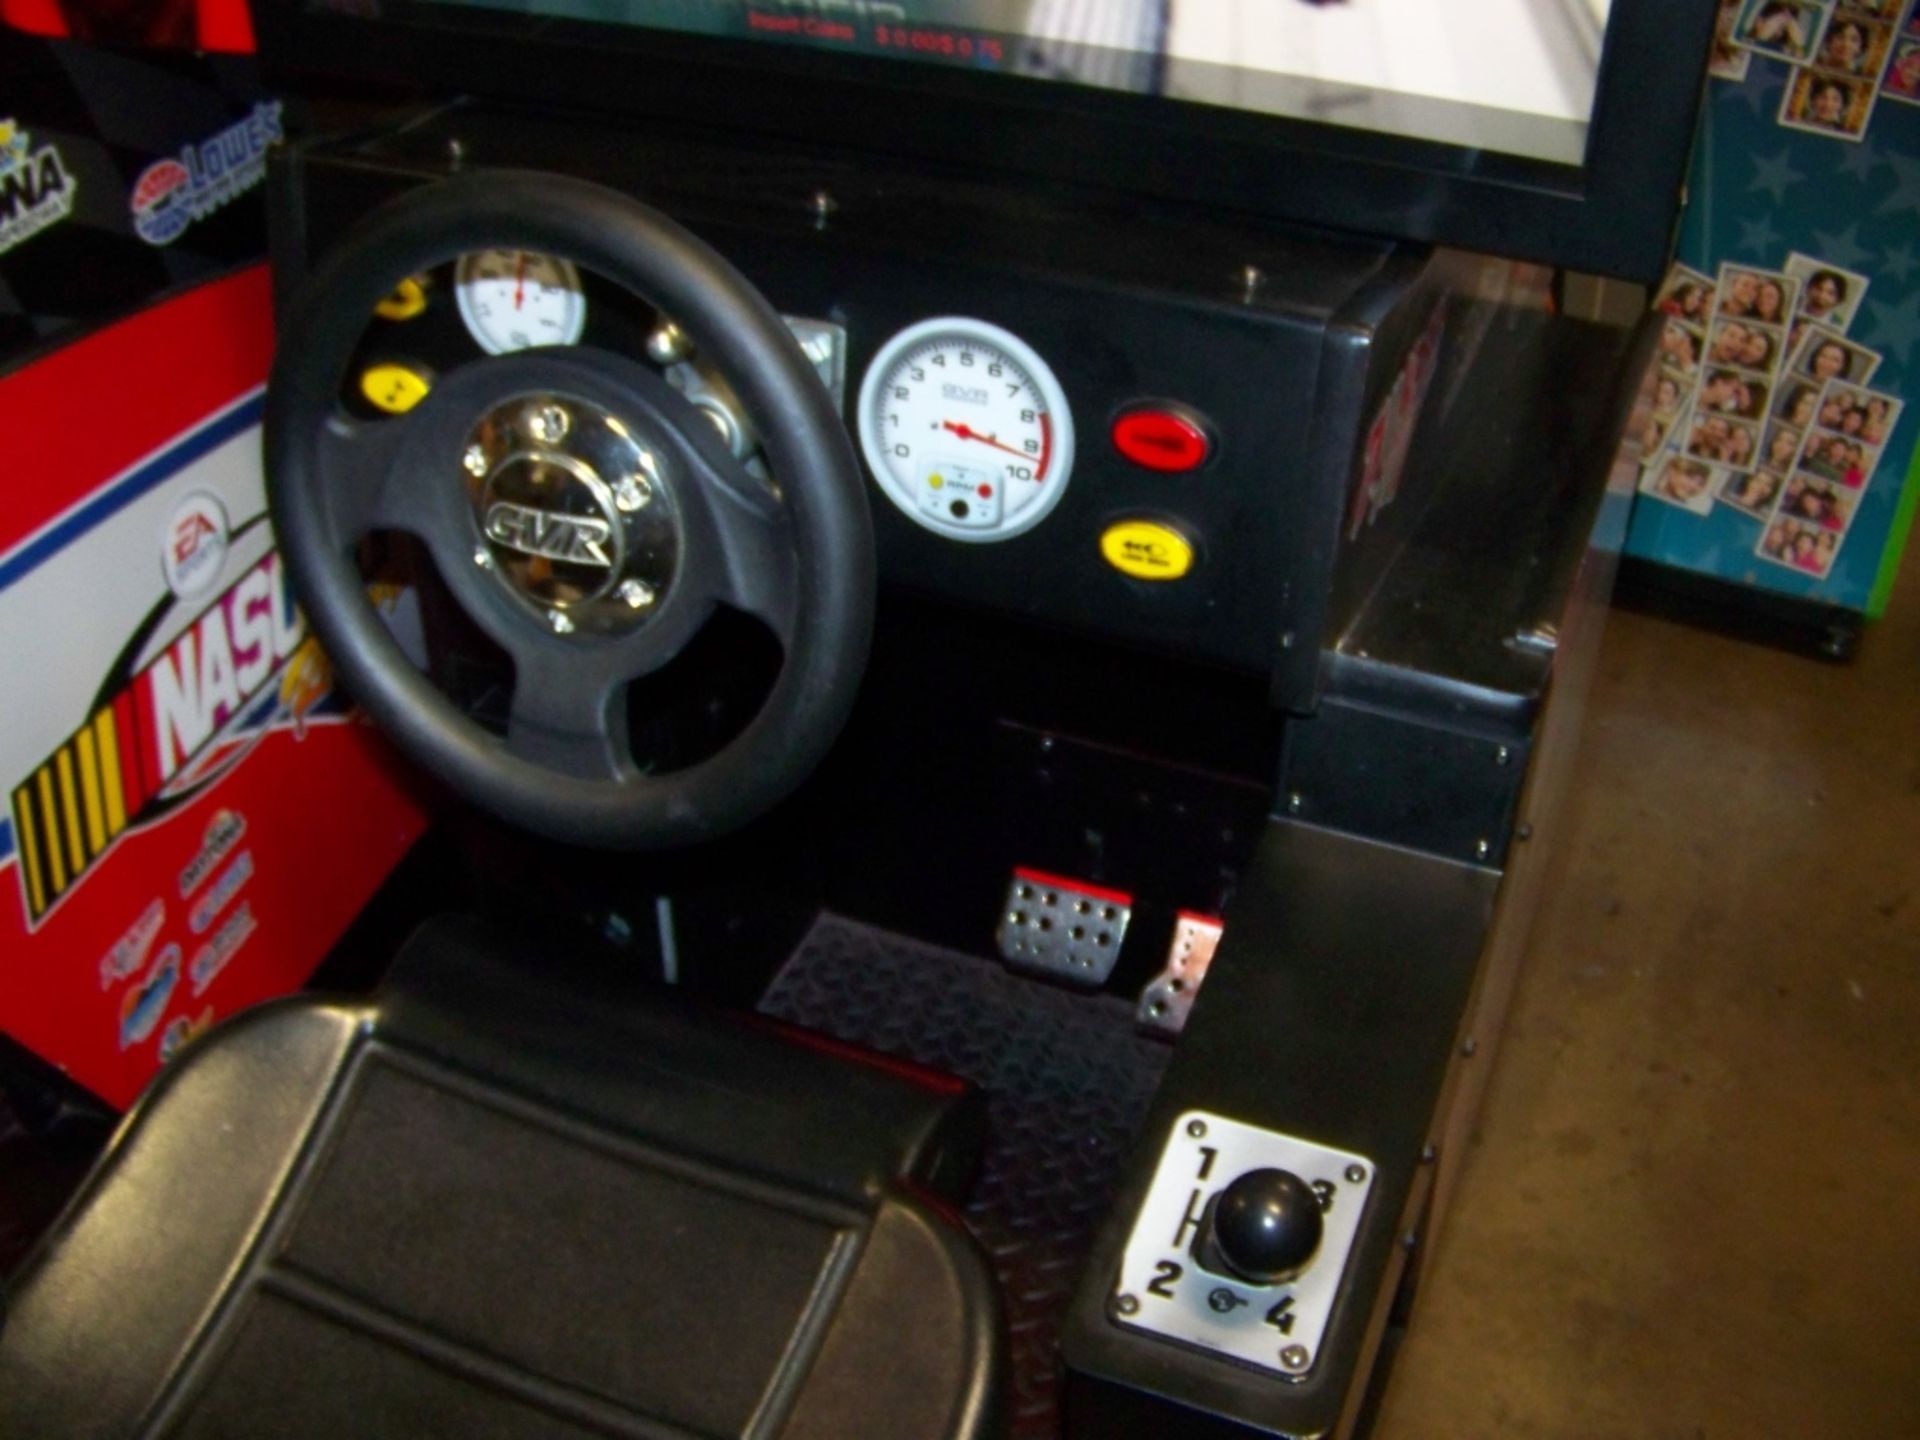 NASCAR RACING 32" LCD ARCADE GAME GLOBAL VR - Image 9 of 9